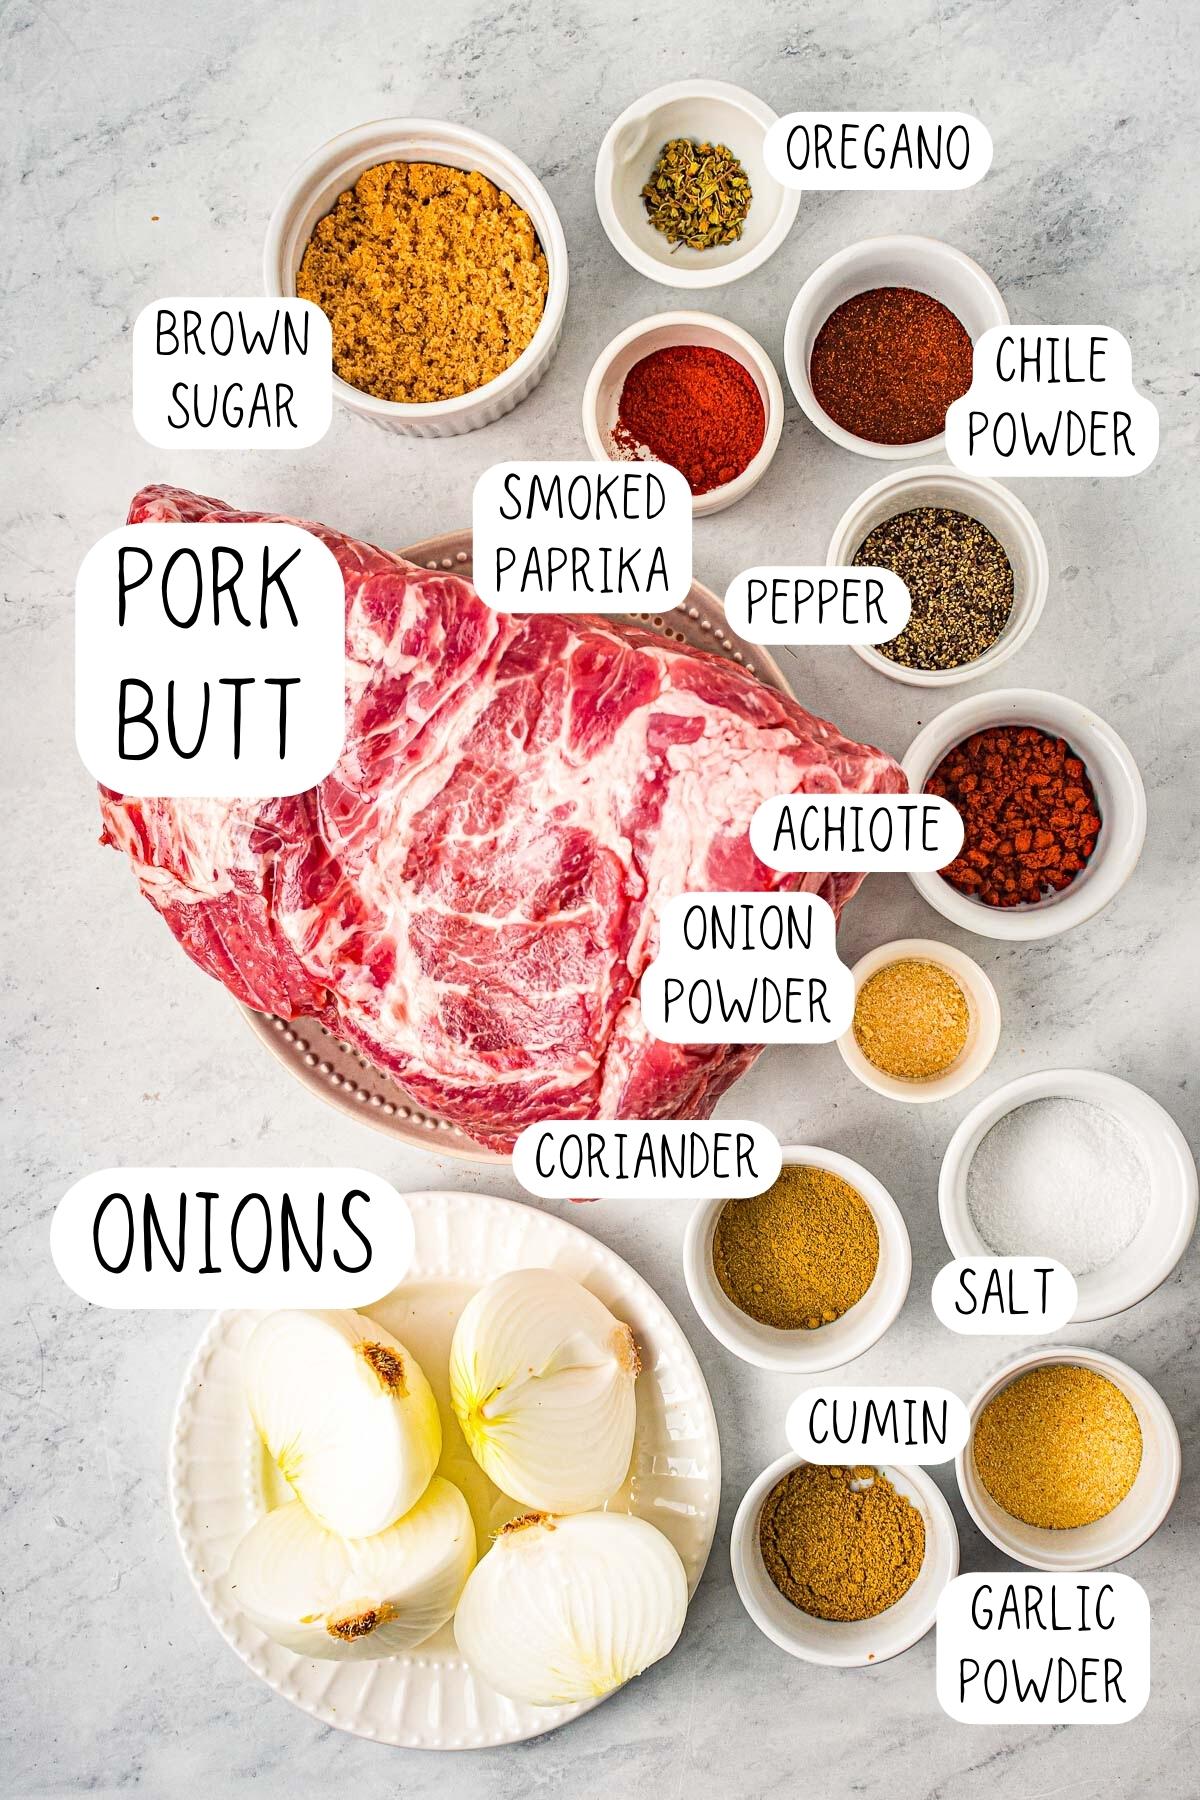 ingredients for slow cooker carnitas, including pepper, paprika, pork butt, brown sugar, oregano and coriander